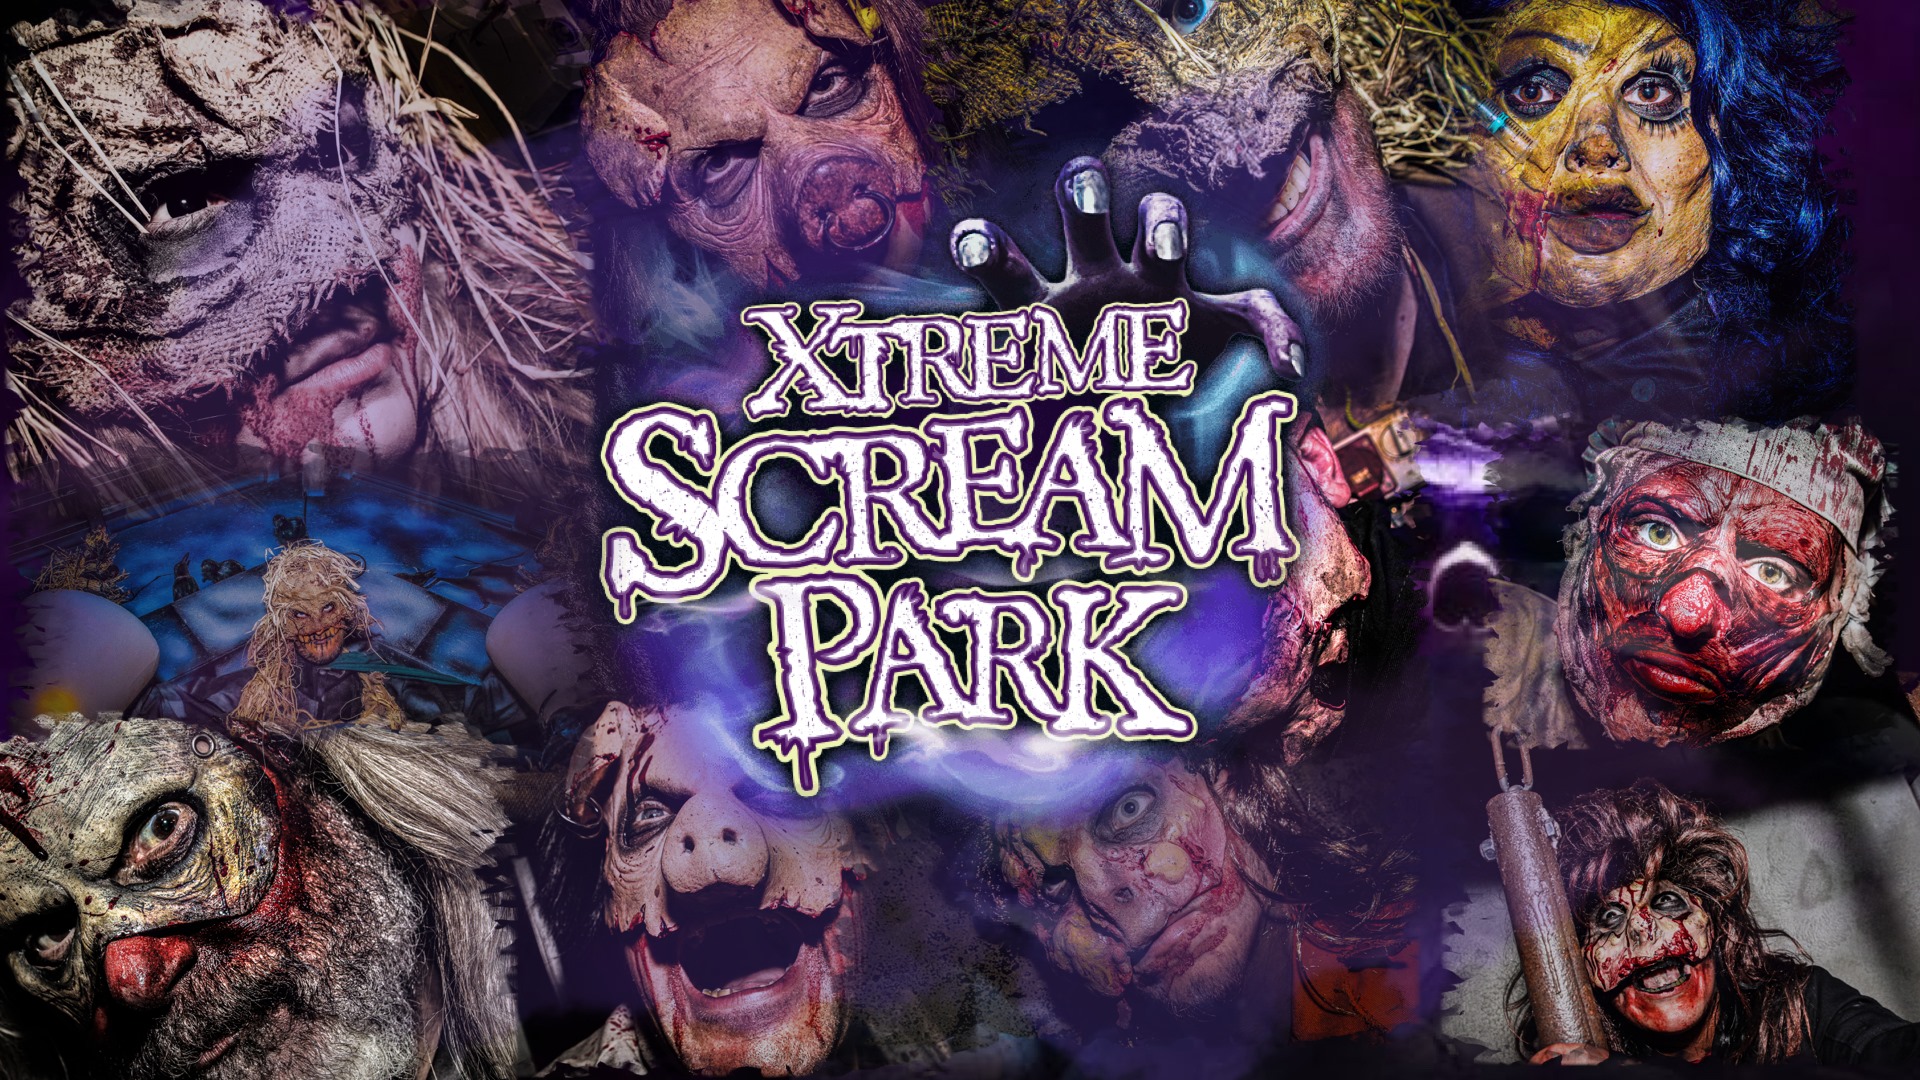 Xtreme Scream Park 2019 Scare Directory